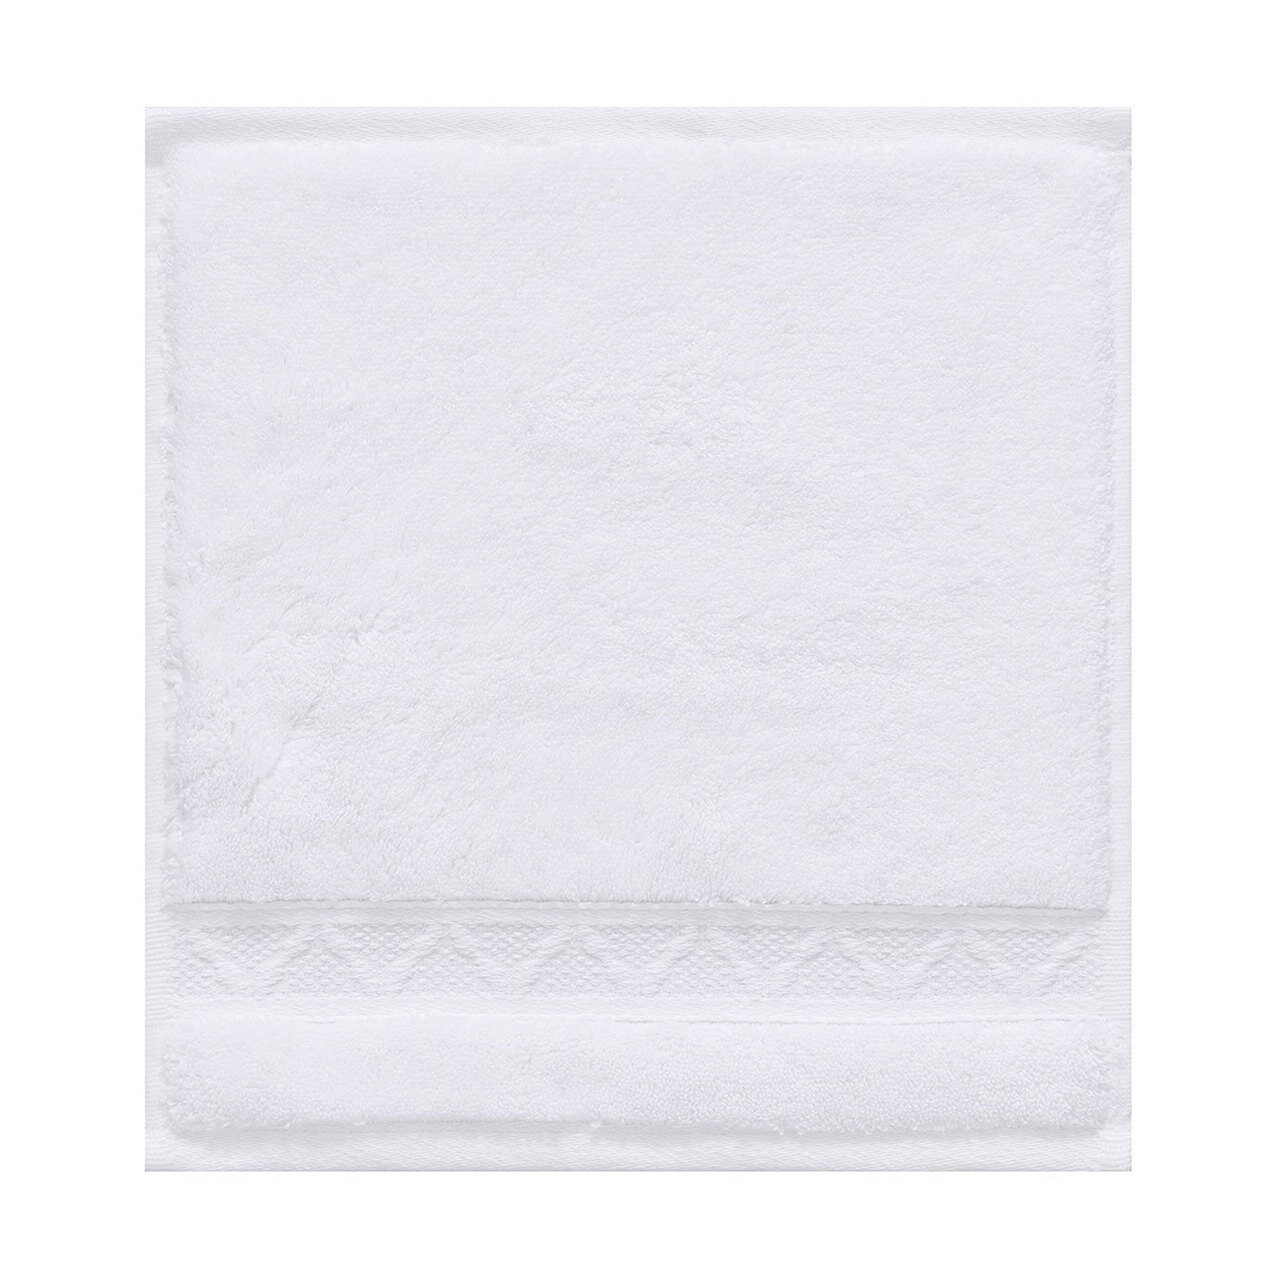 Le Jacquard Francais Caresse White Washcloth 12 X 12 Inch 22827 Set of 4